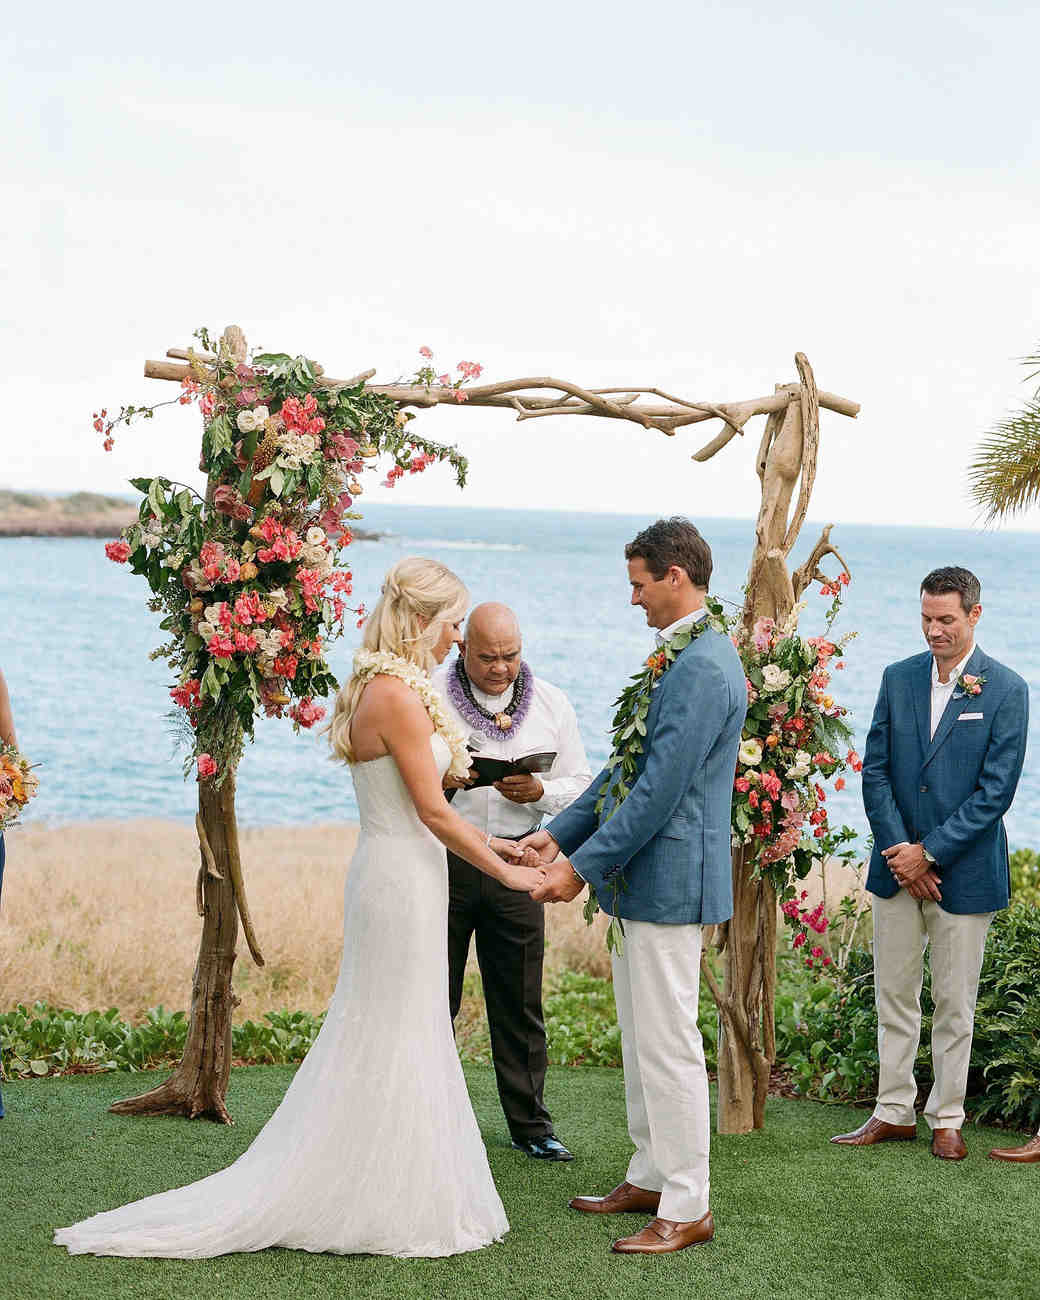 One Couple's Tropical Destination Wedding in Hawaii | Martha Stewart ...